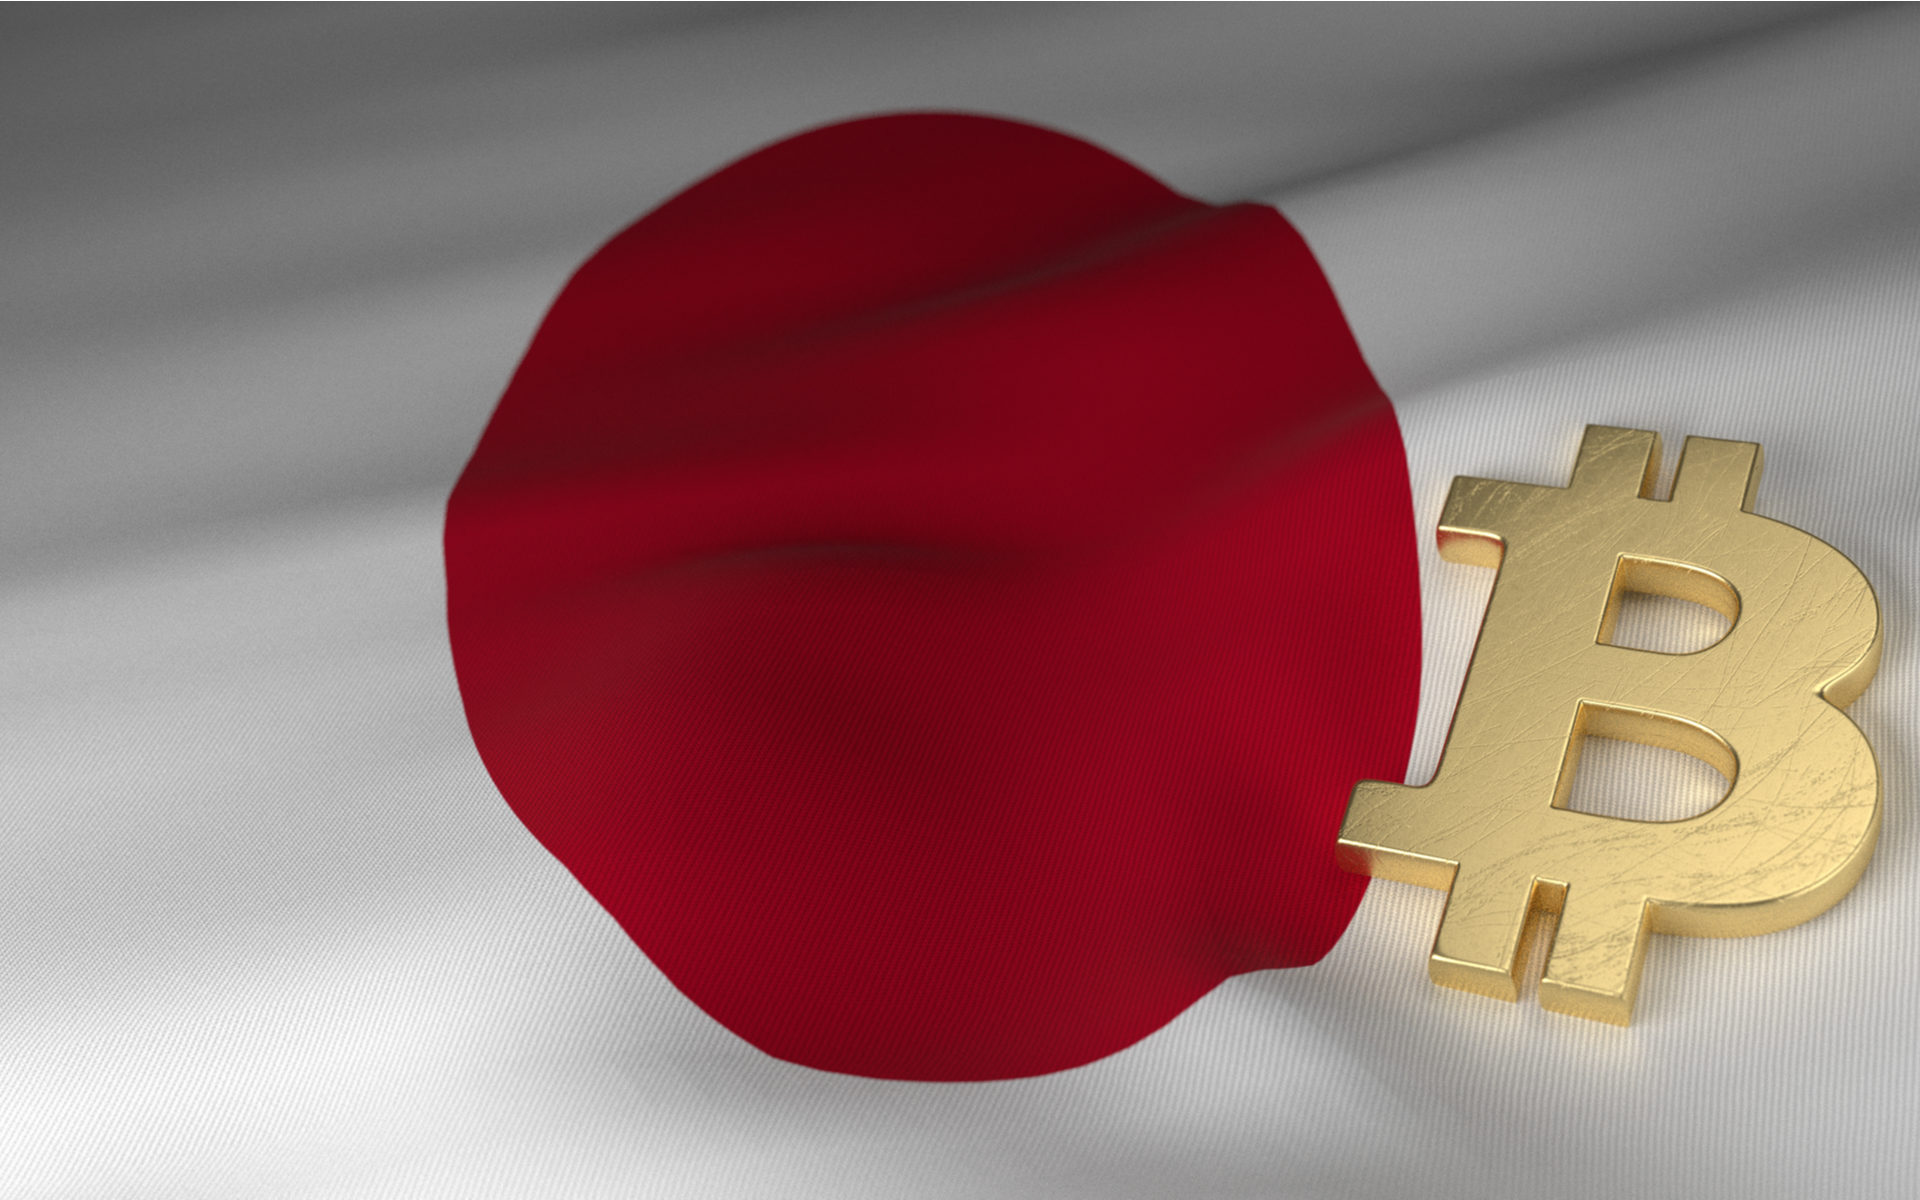 japan bitcoin adoption leader